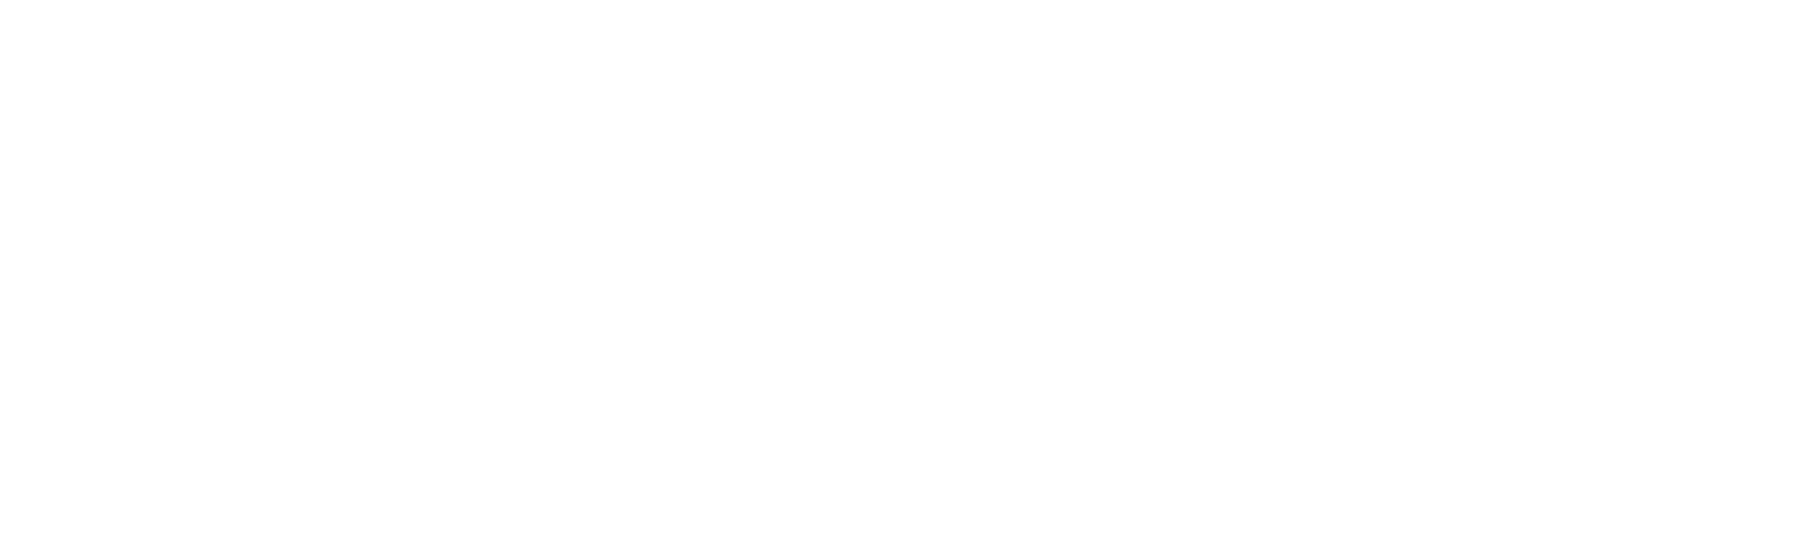 Nerox Internetbureau